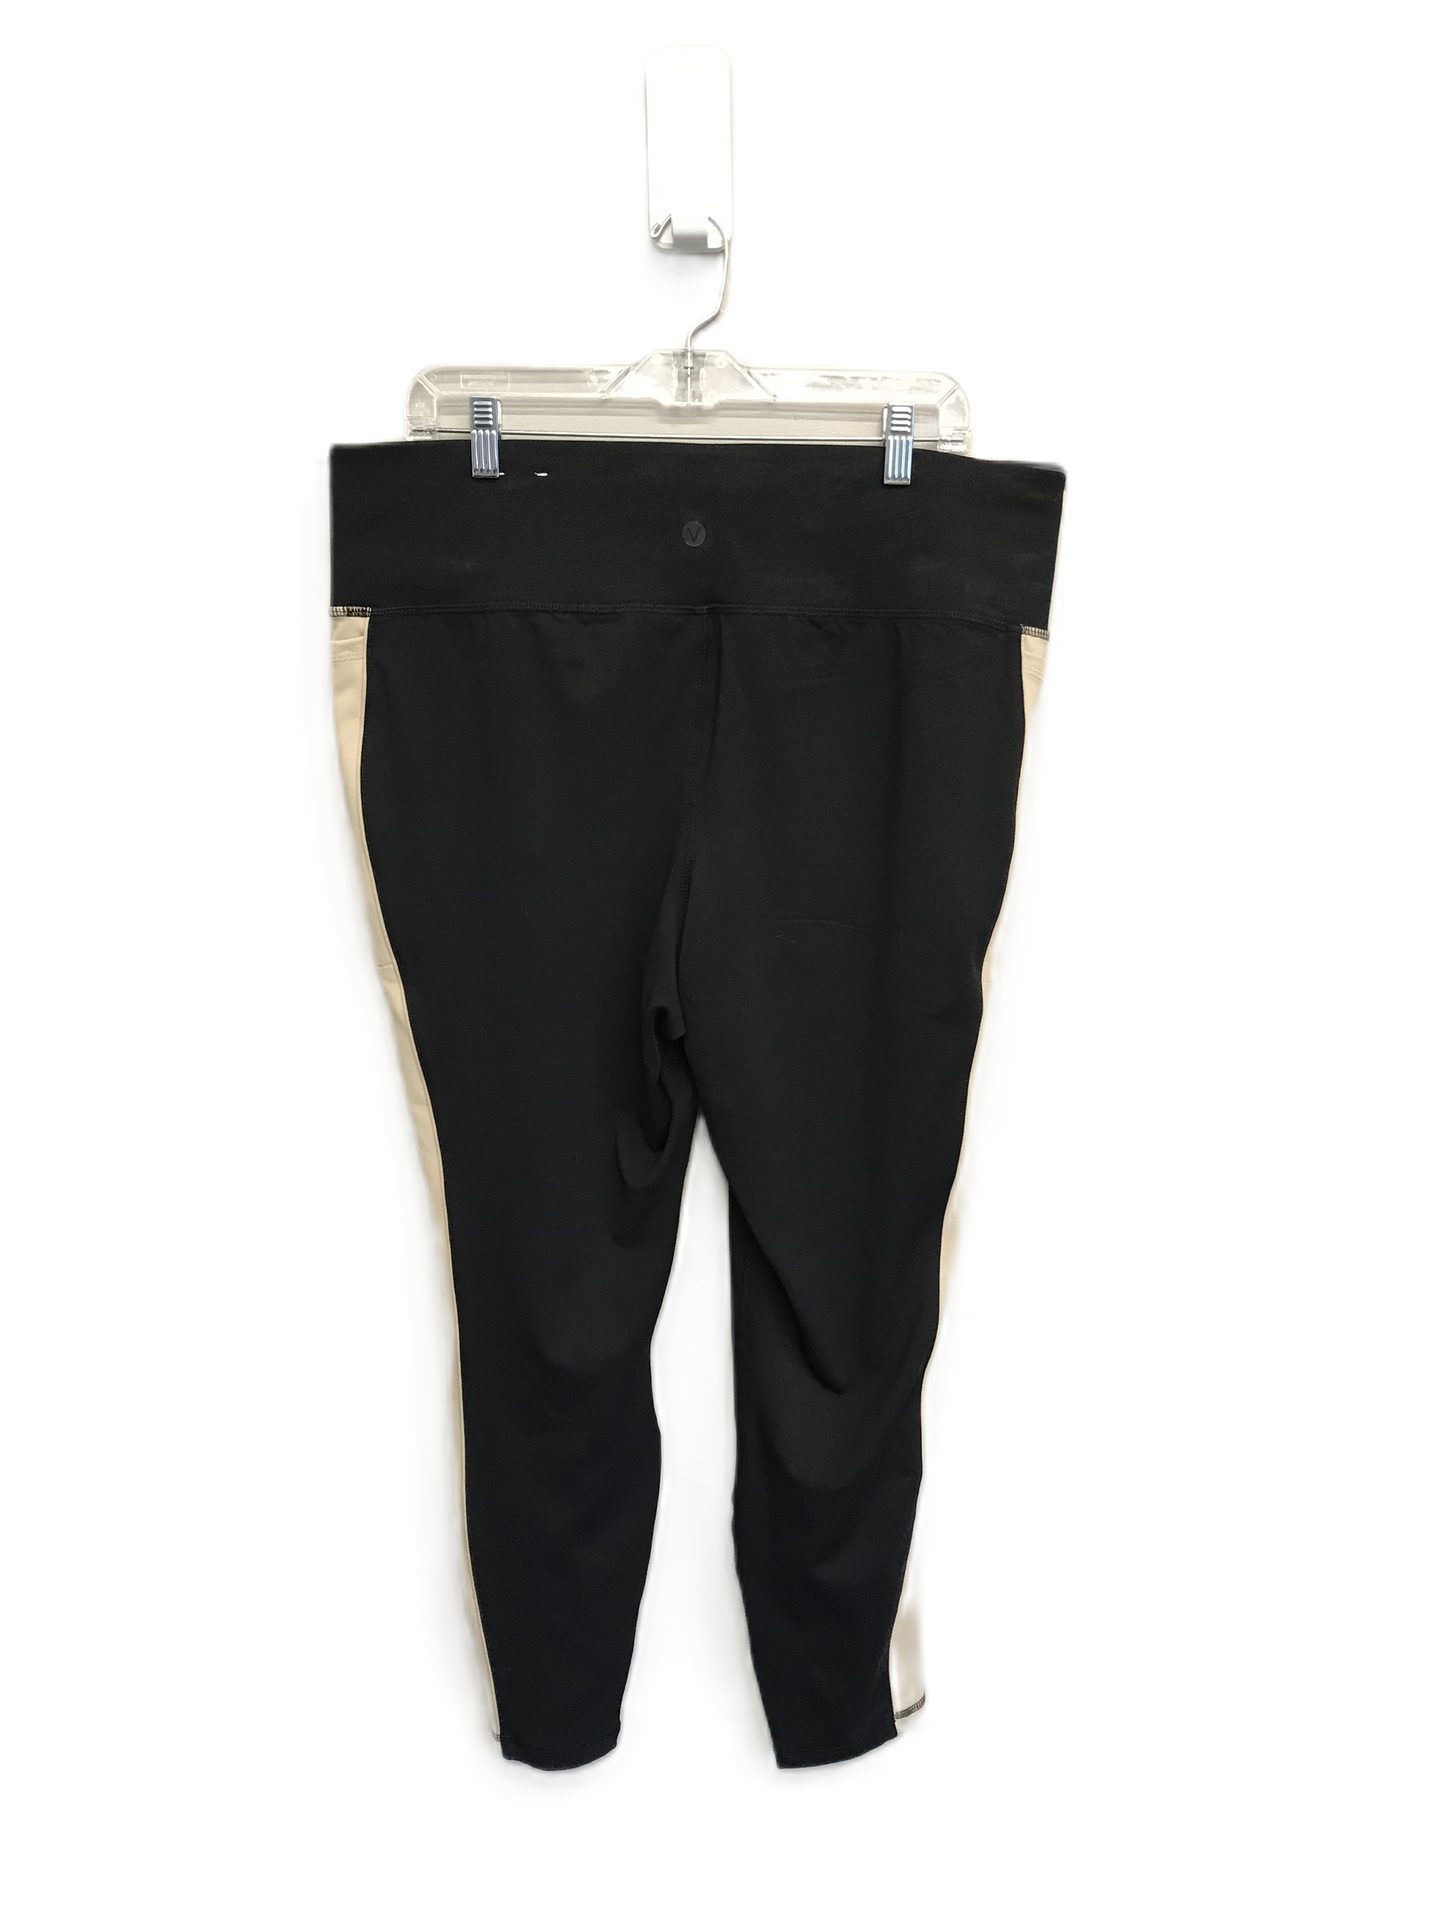 Black & Tan Athletic Pants By Livi Active, Size: 1x